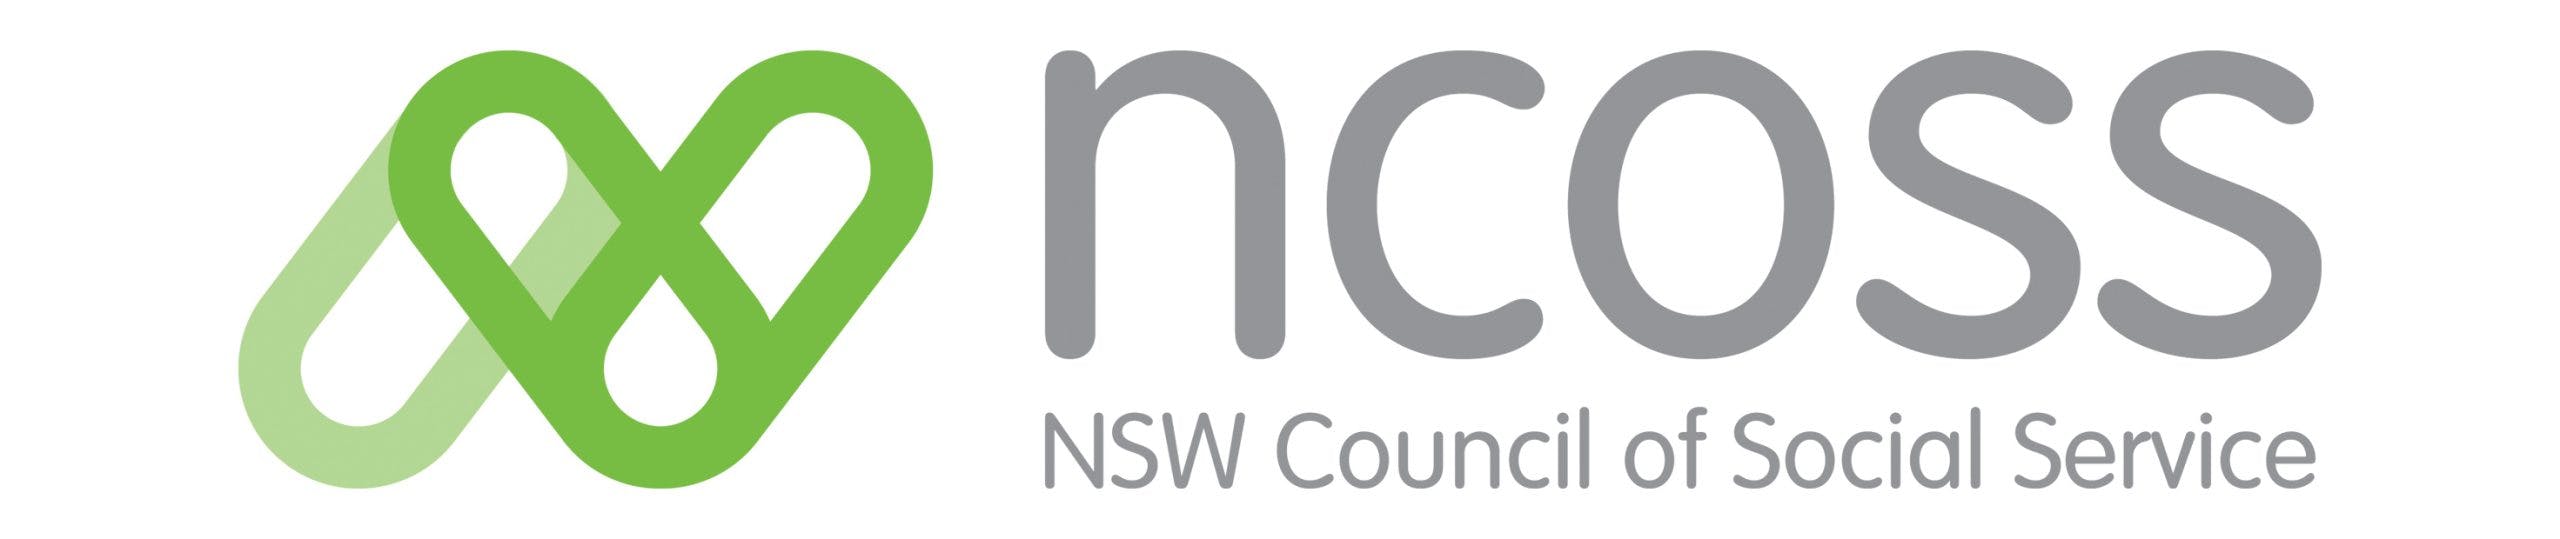 NSW Council of Social Service